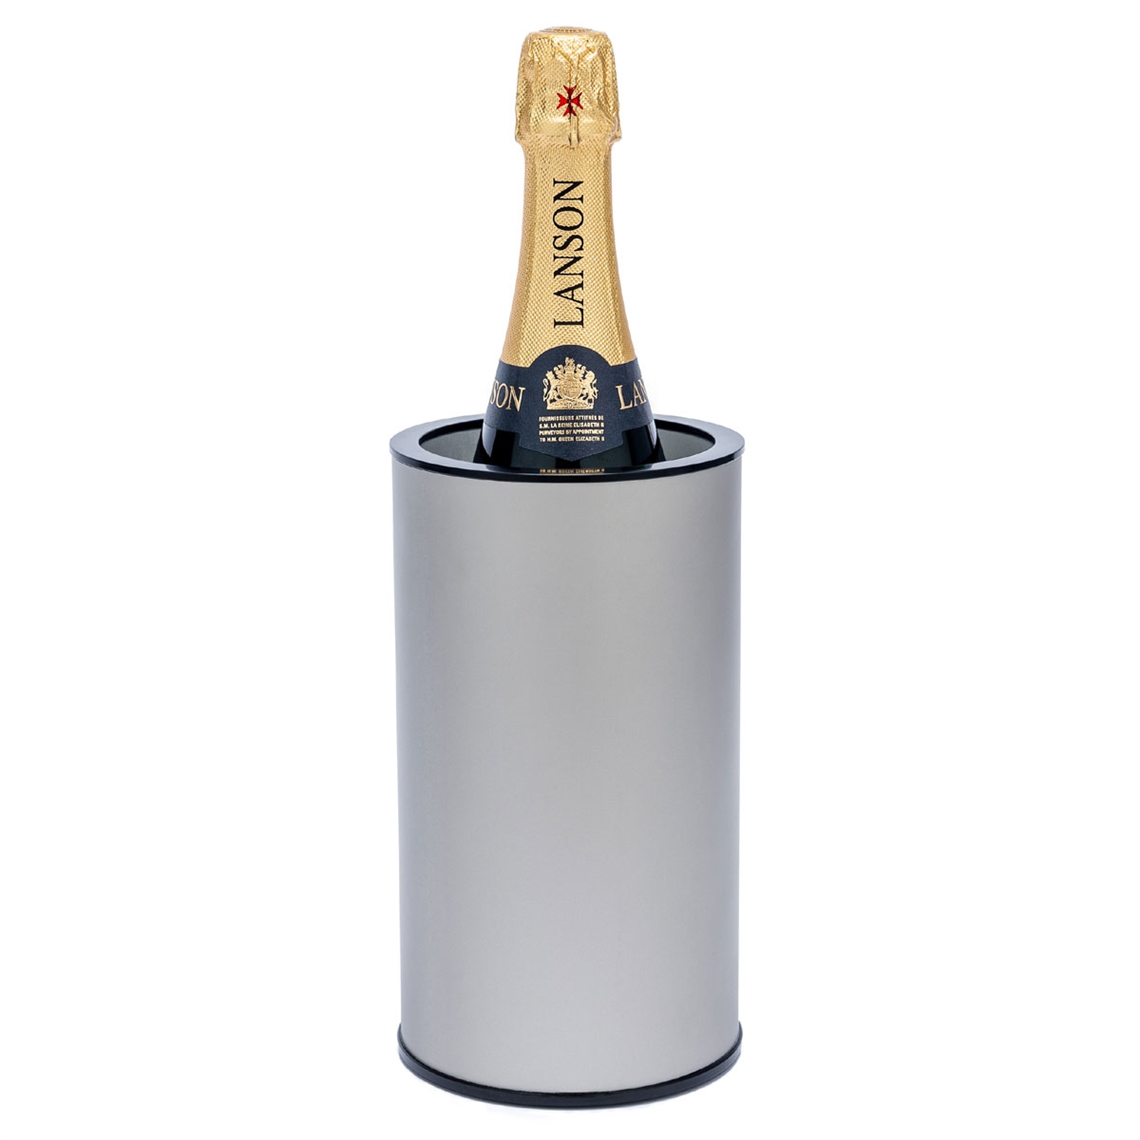 Hielo Wine & Champagne Cooler - Gunmetal Grey